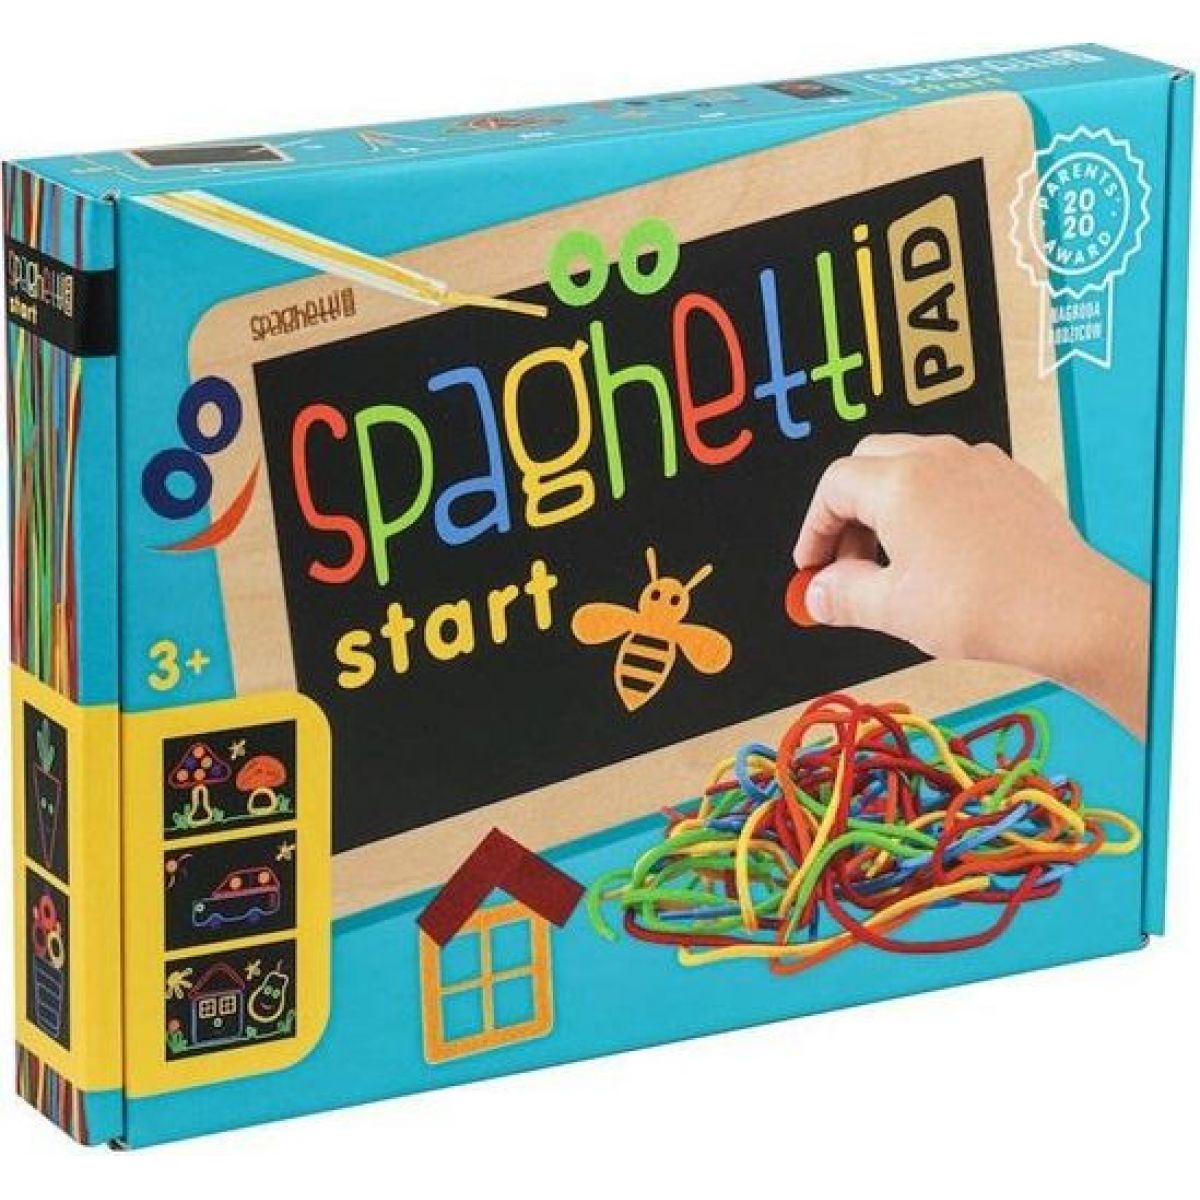 Toypex Spaghetti Pad Start